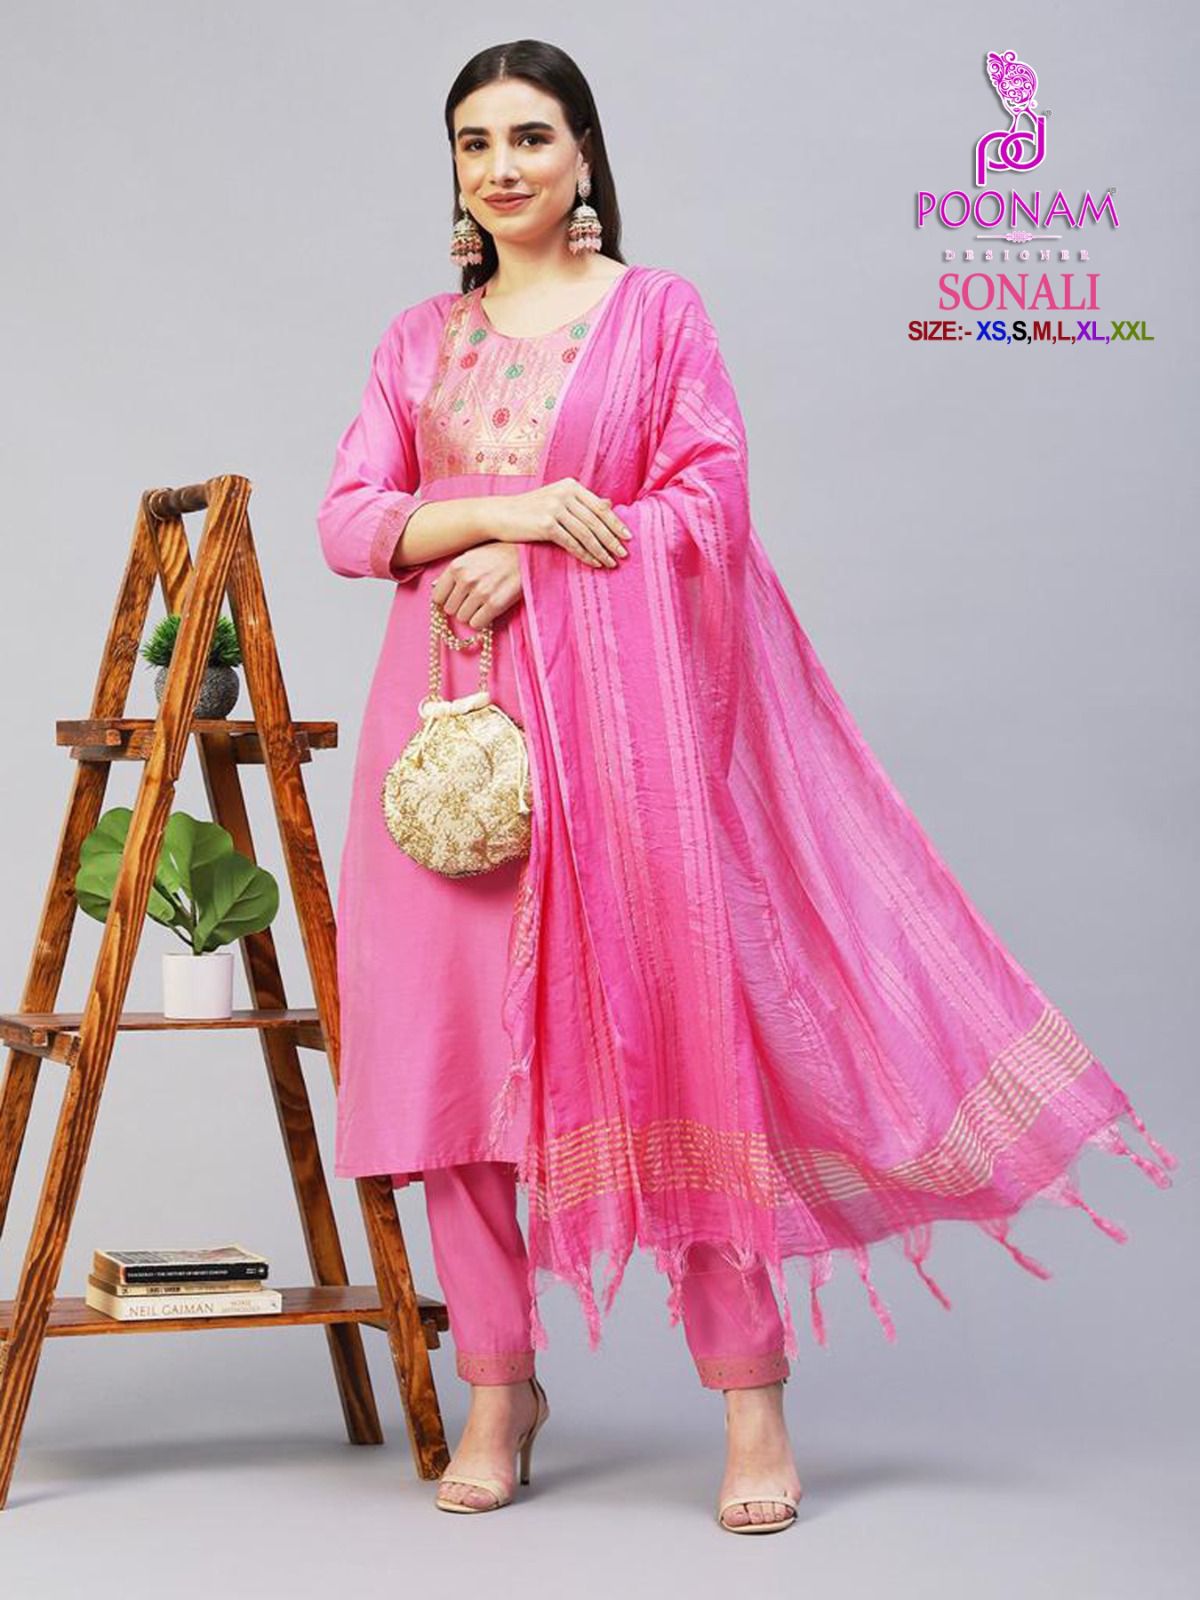 Poonam Sonali collection 2